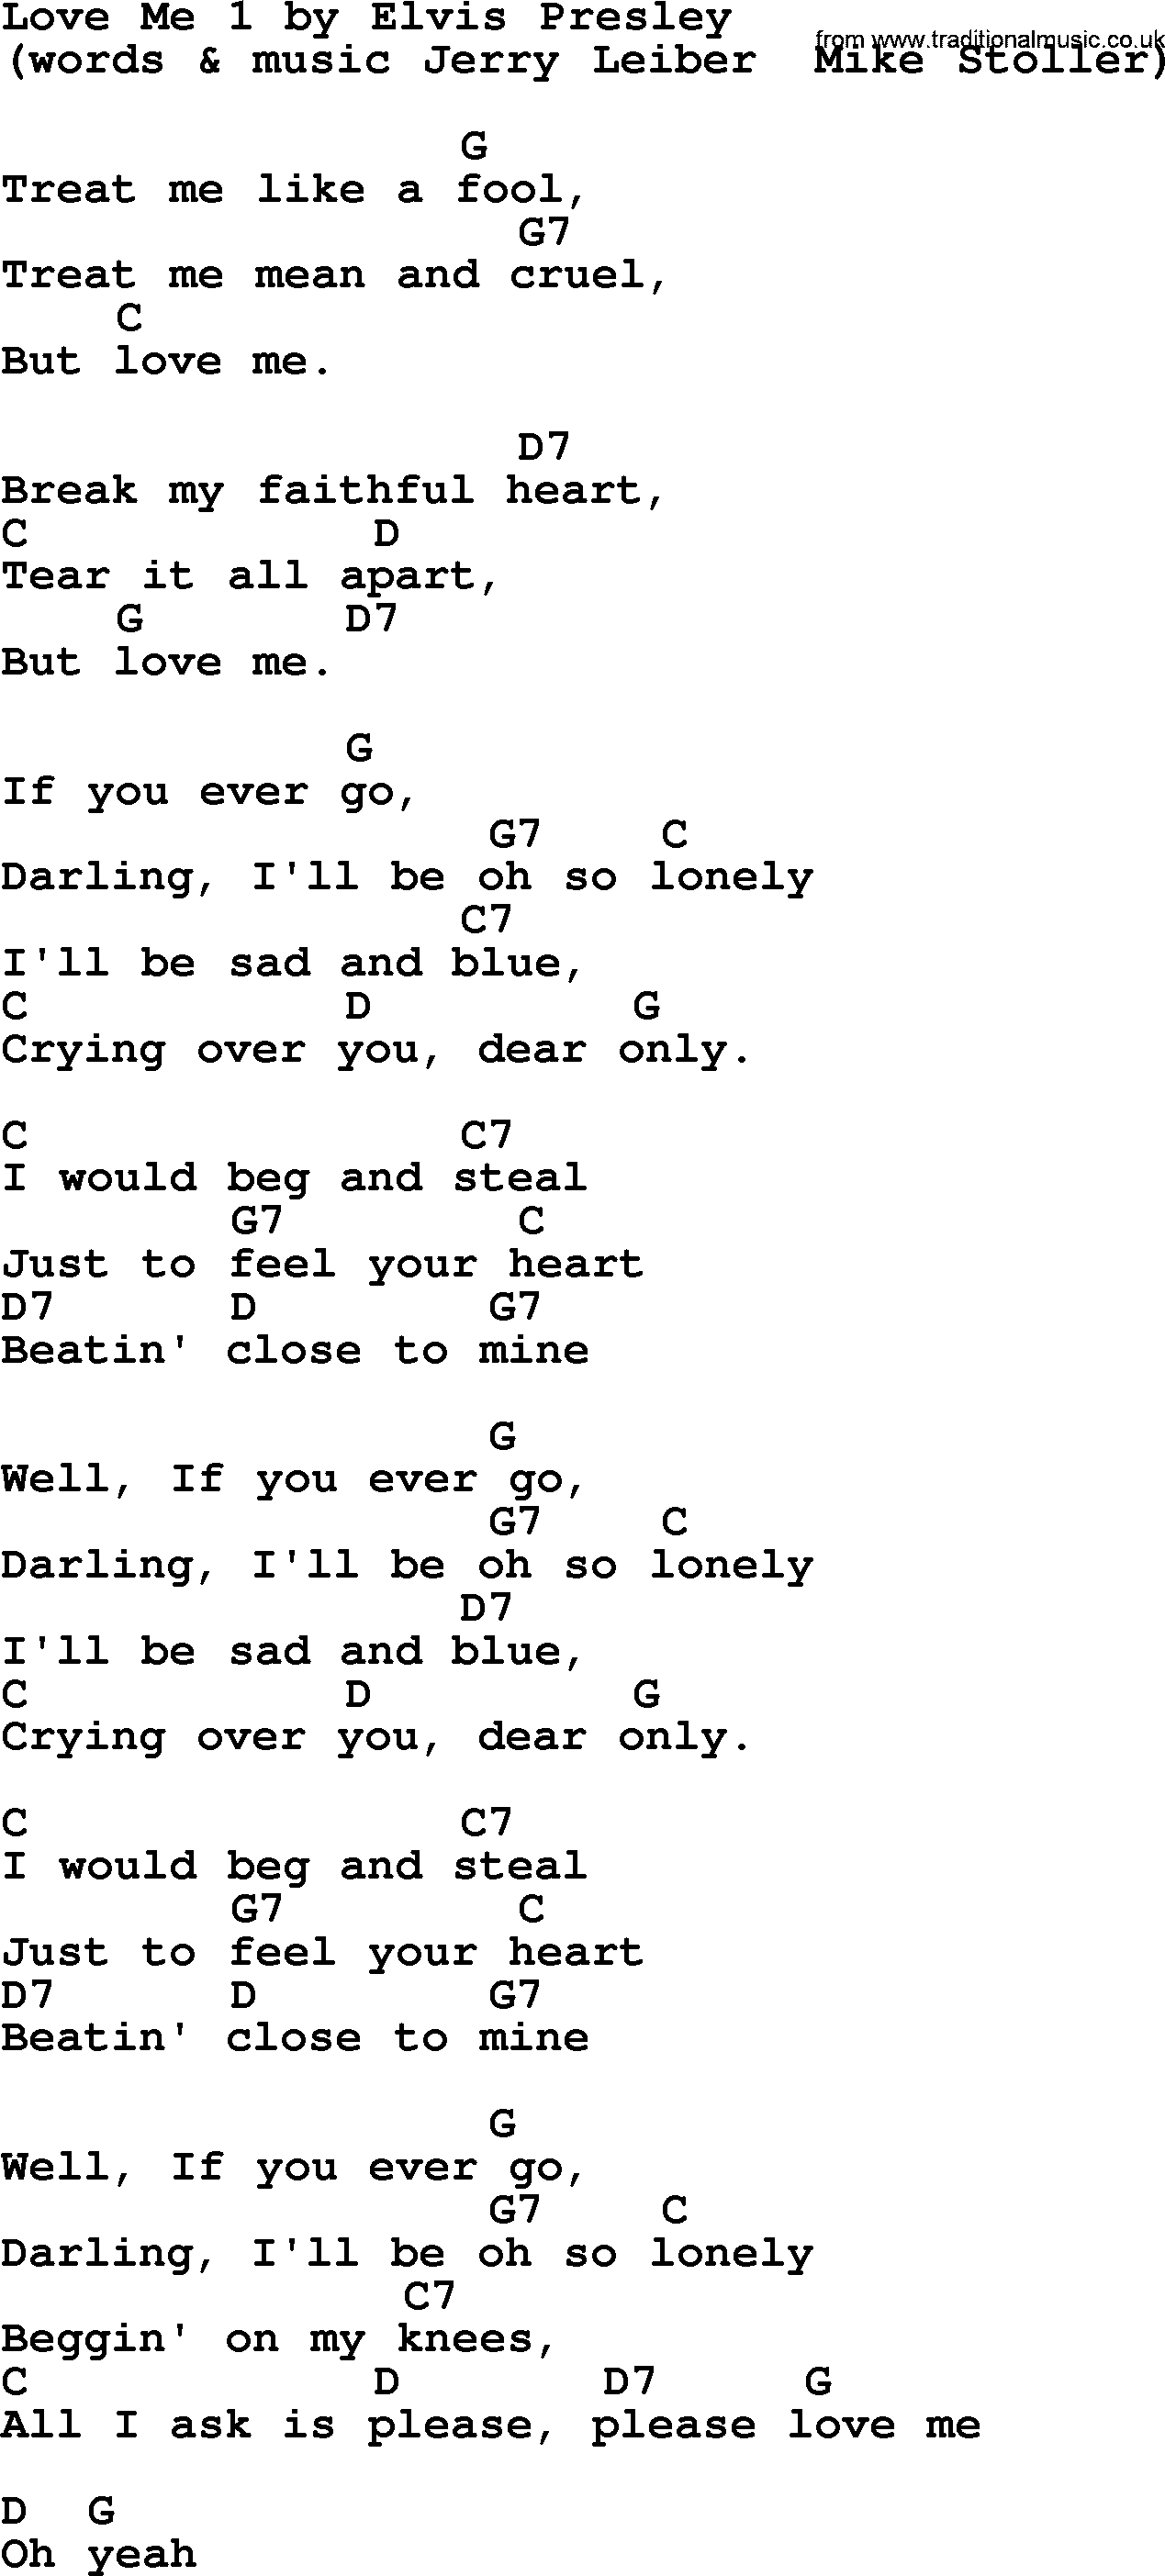 Elvis Presley song: Love Me 1, lyrics and chords